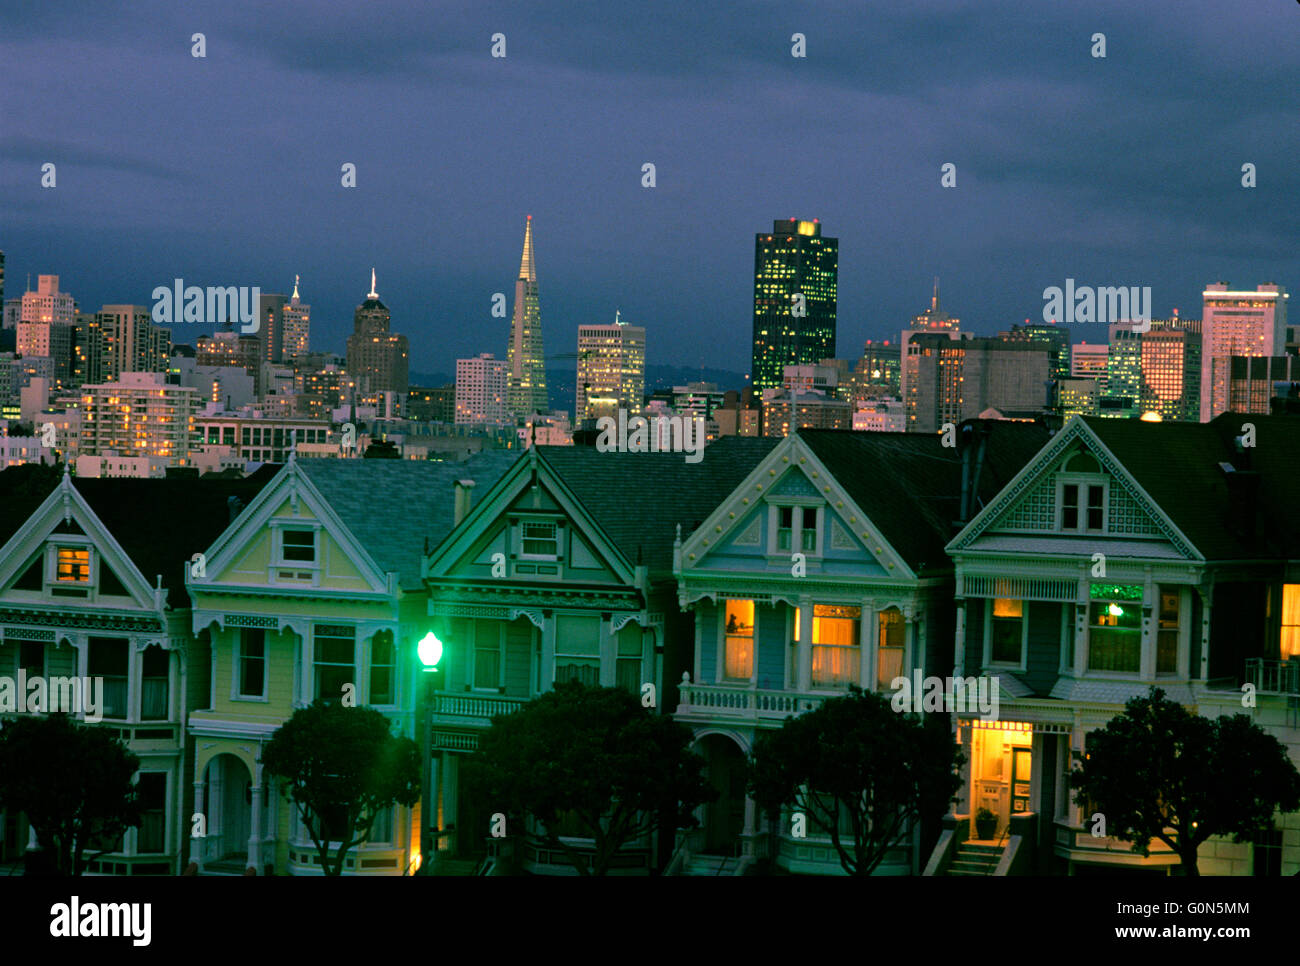 Victorian houses, San Francisco, California, Alamay Square, Stock Photo